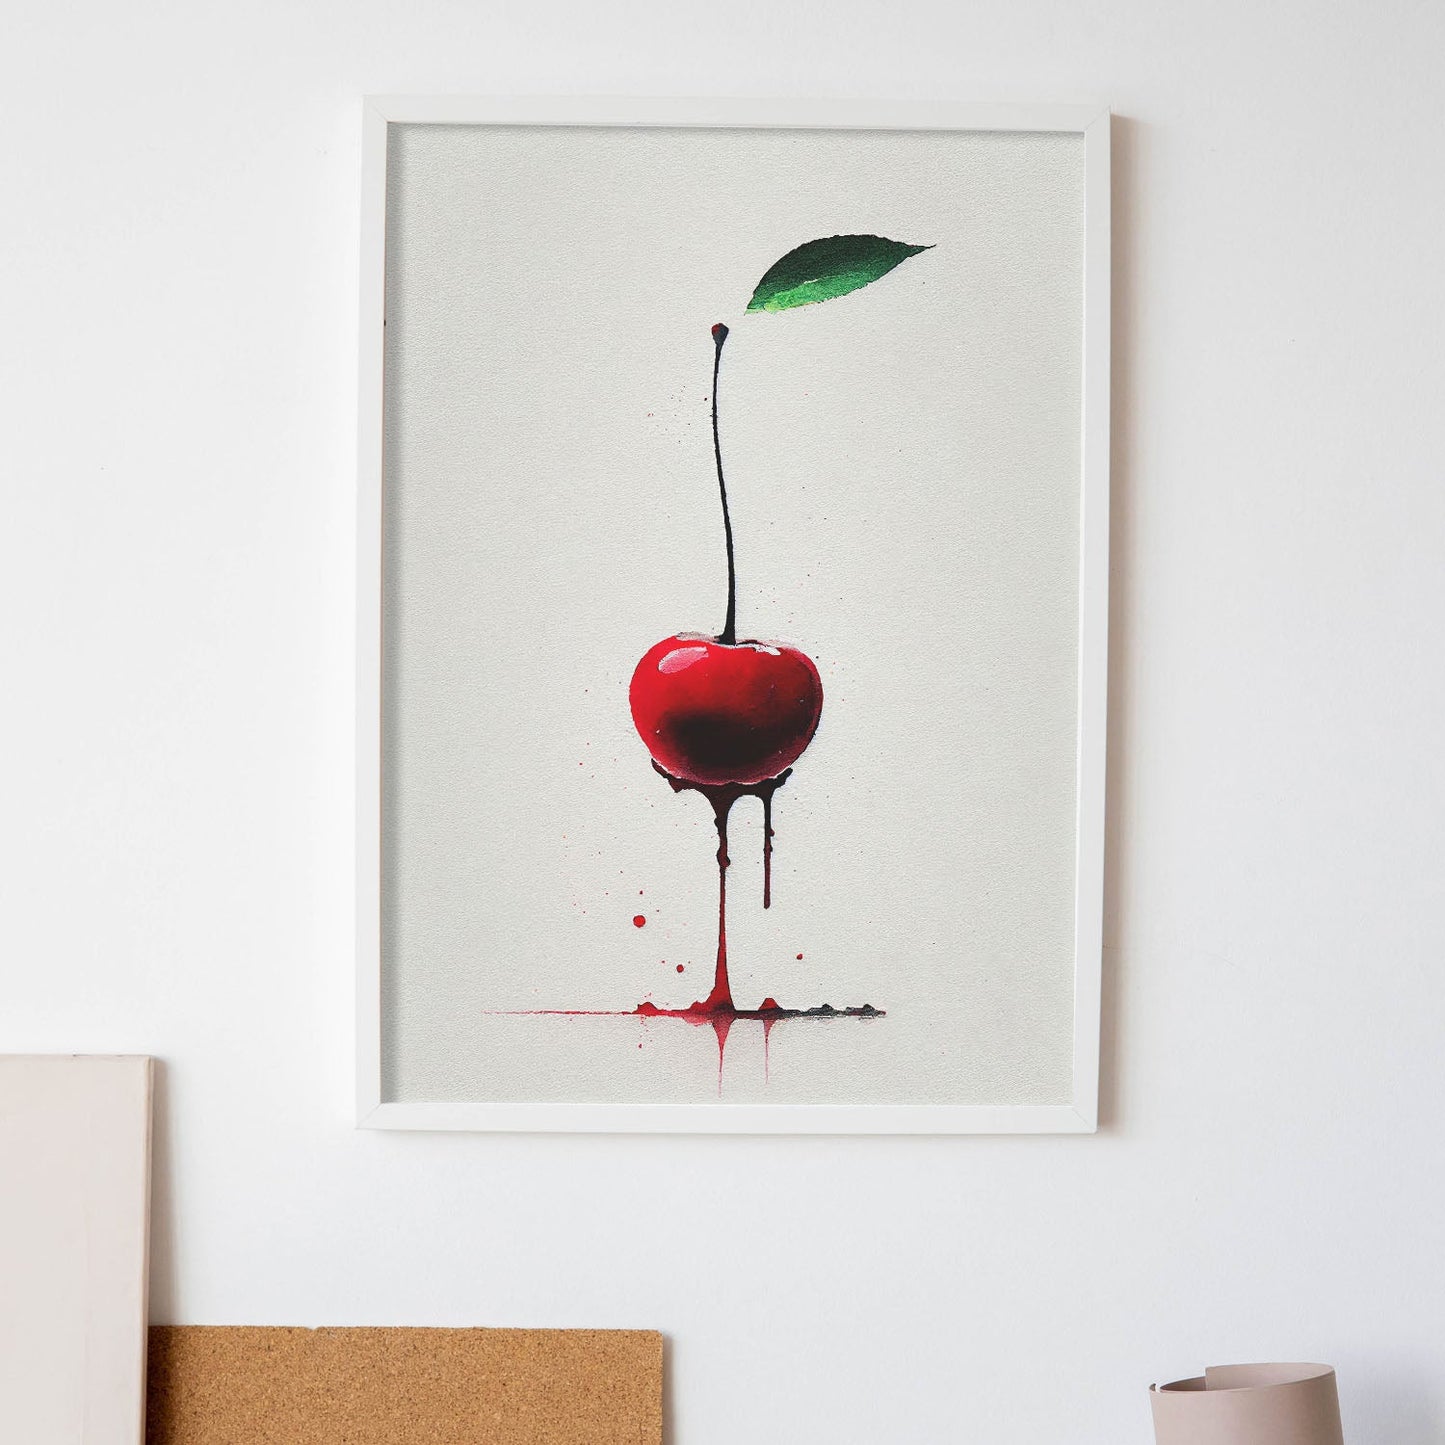 Nacnic minimalist Cherry_2. Aesthetic Wall Art Prints for Bedroom or Living Room Design.-Artwork-Nacnic-A4-Sin Marco-Nacnic Estudio SL